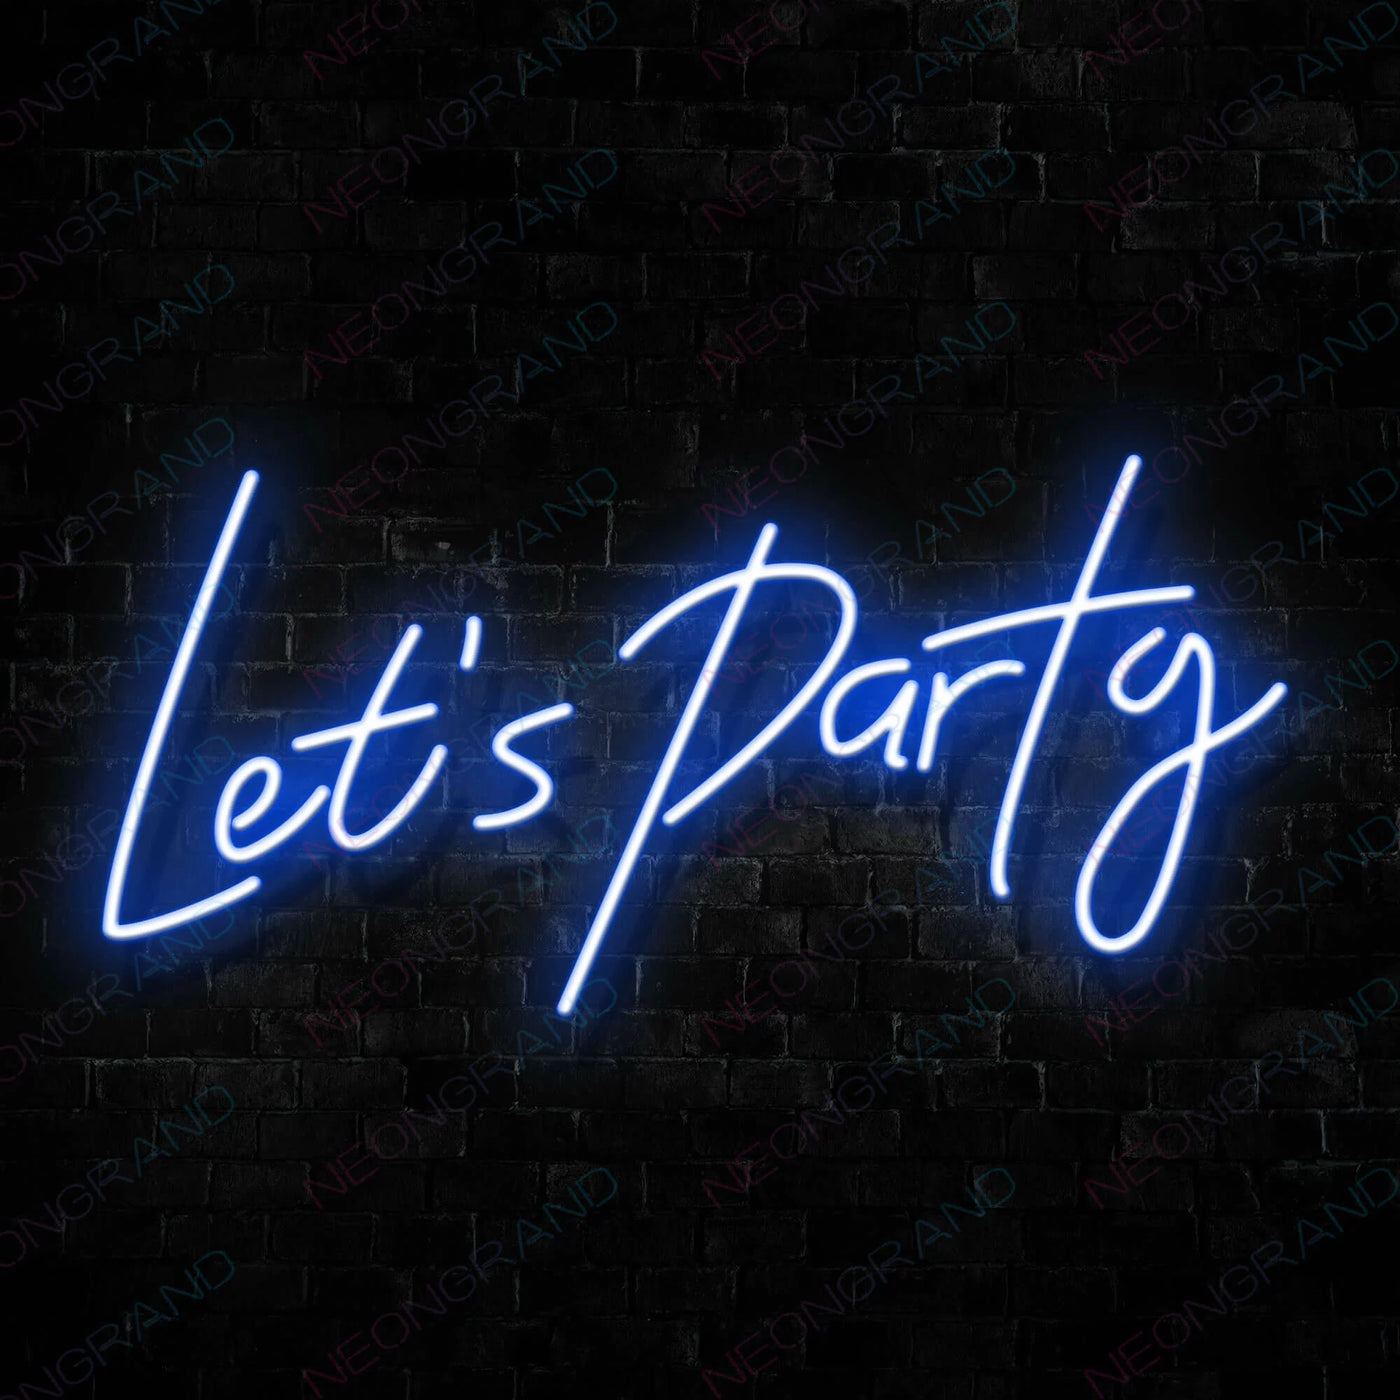 Let's Party Neon Sign Led Light Blue